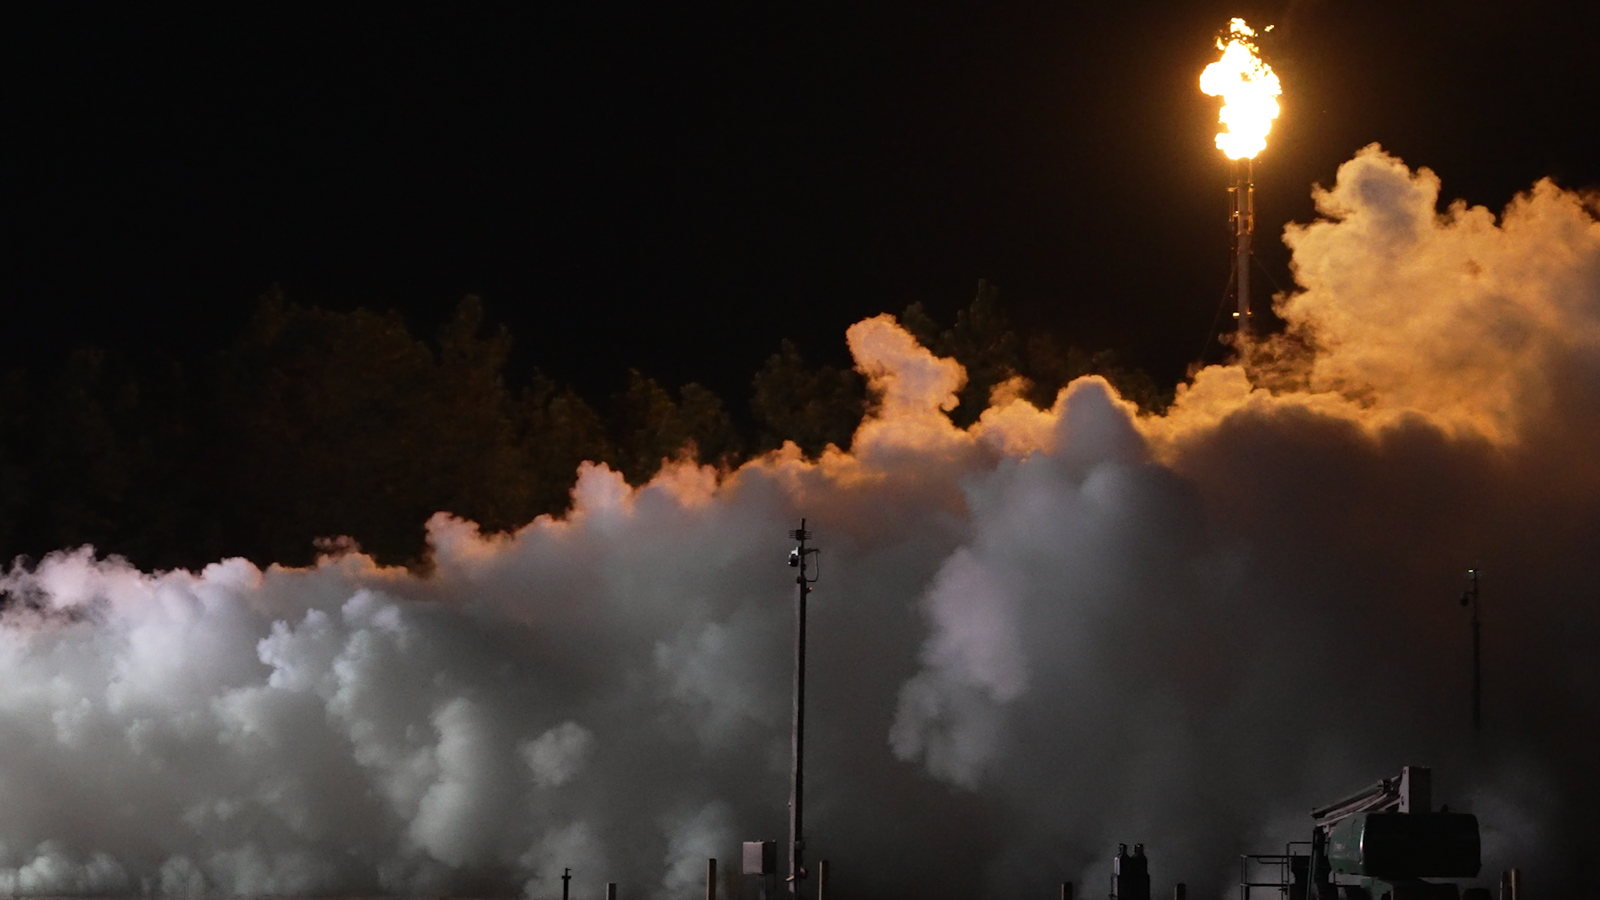 A five-minute engine test sends a massive steam cloud into the air